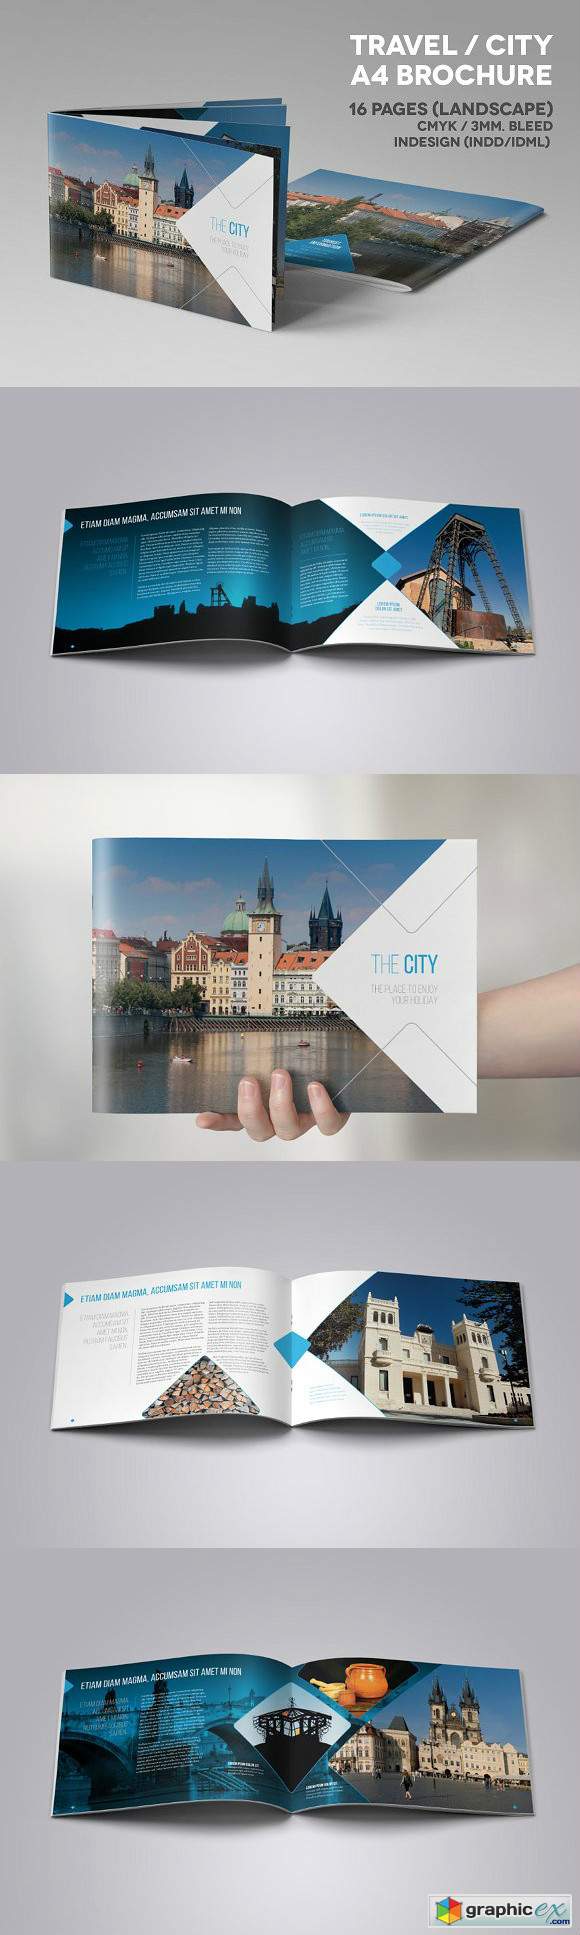 Travel City A4 landscape brochure